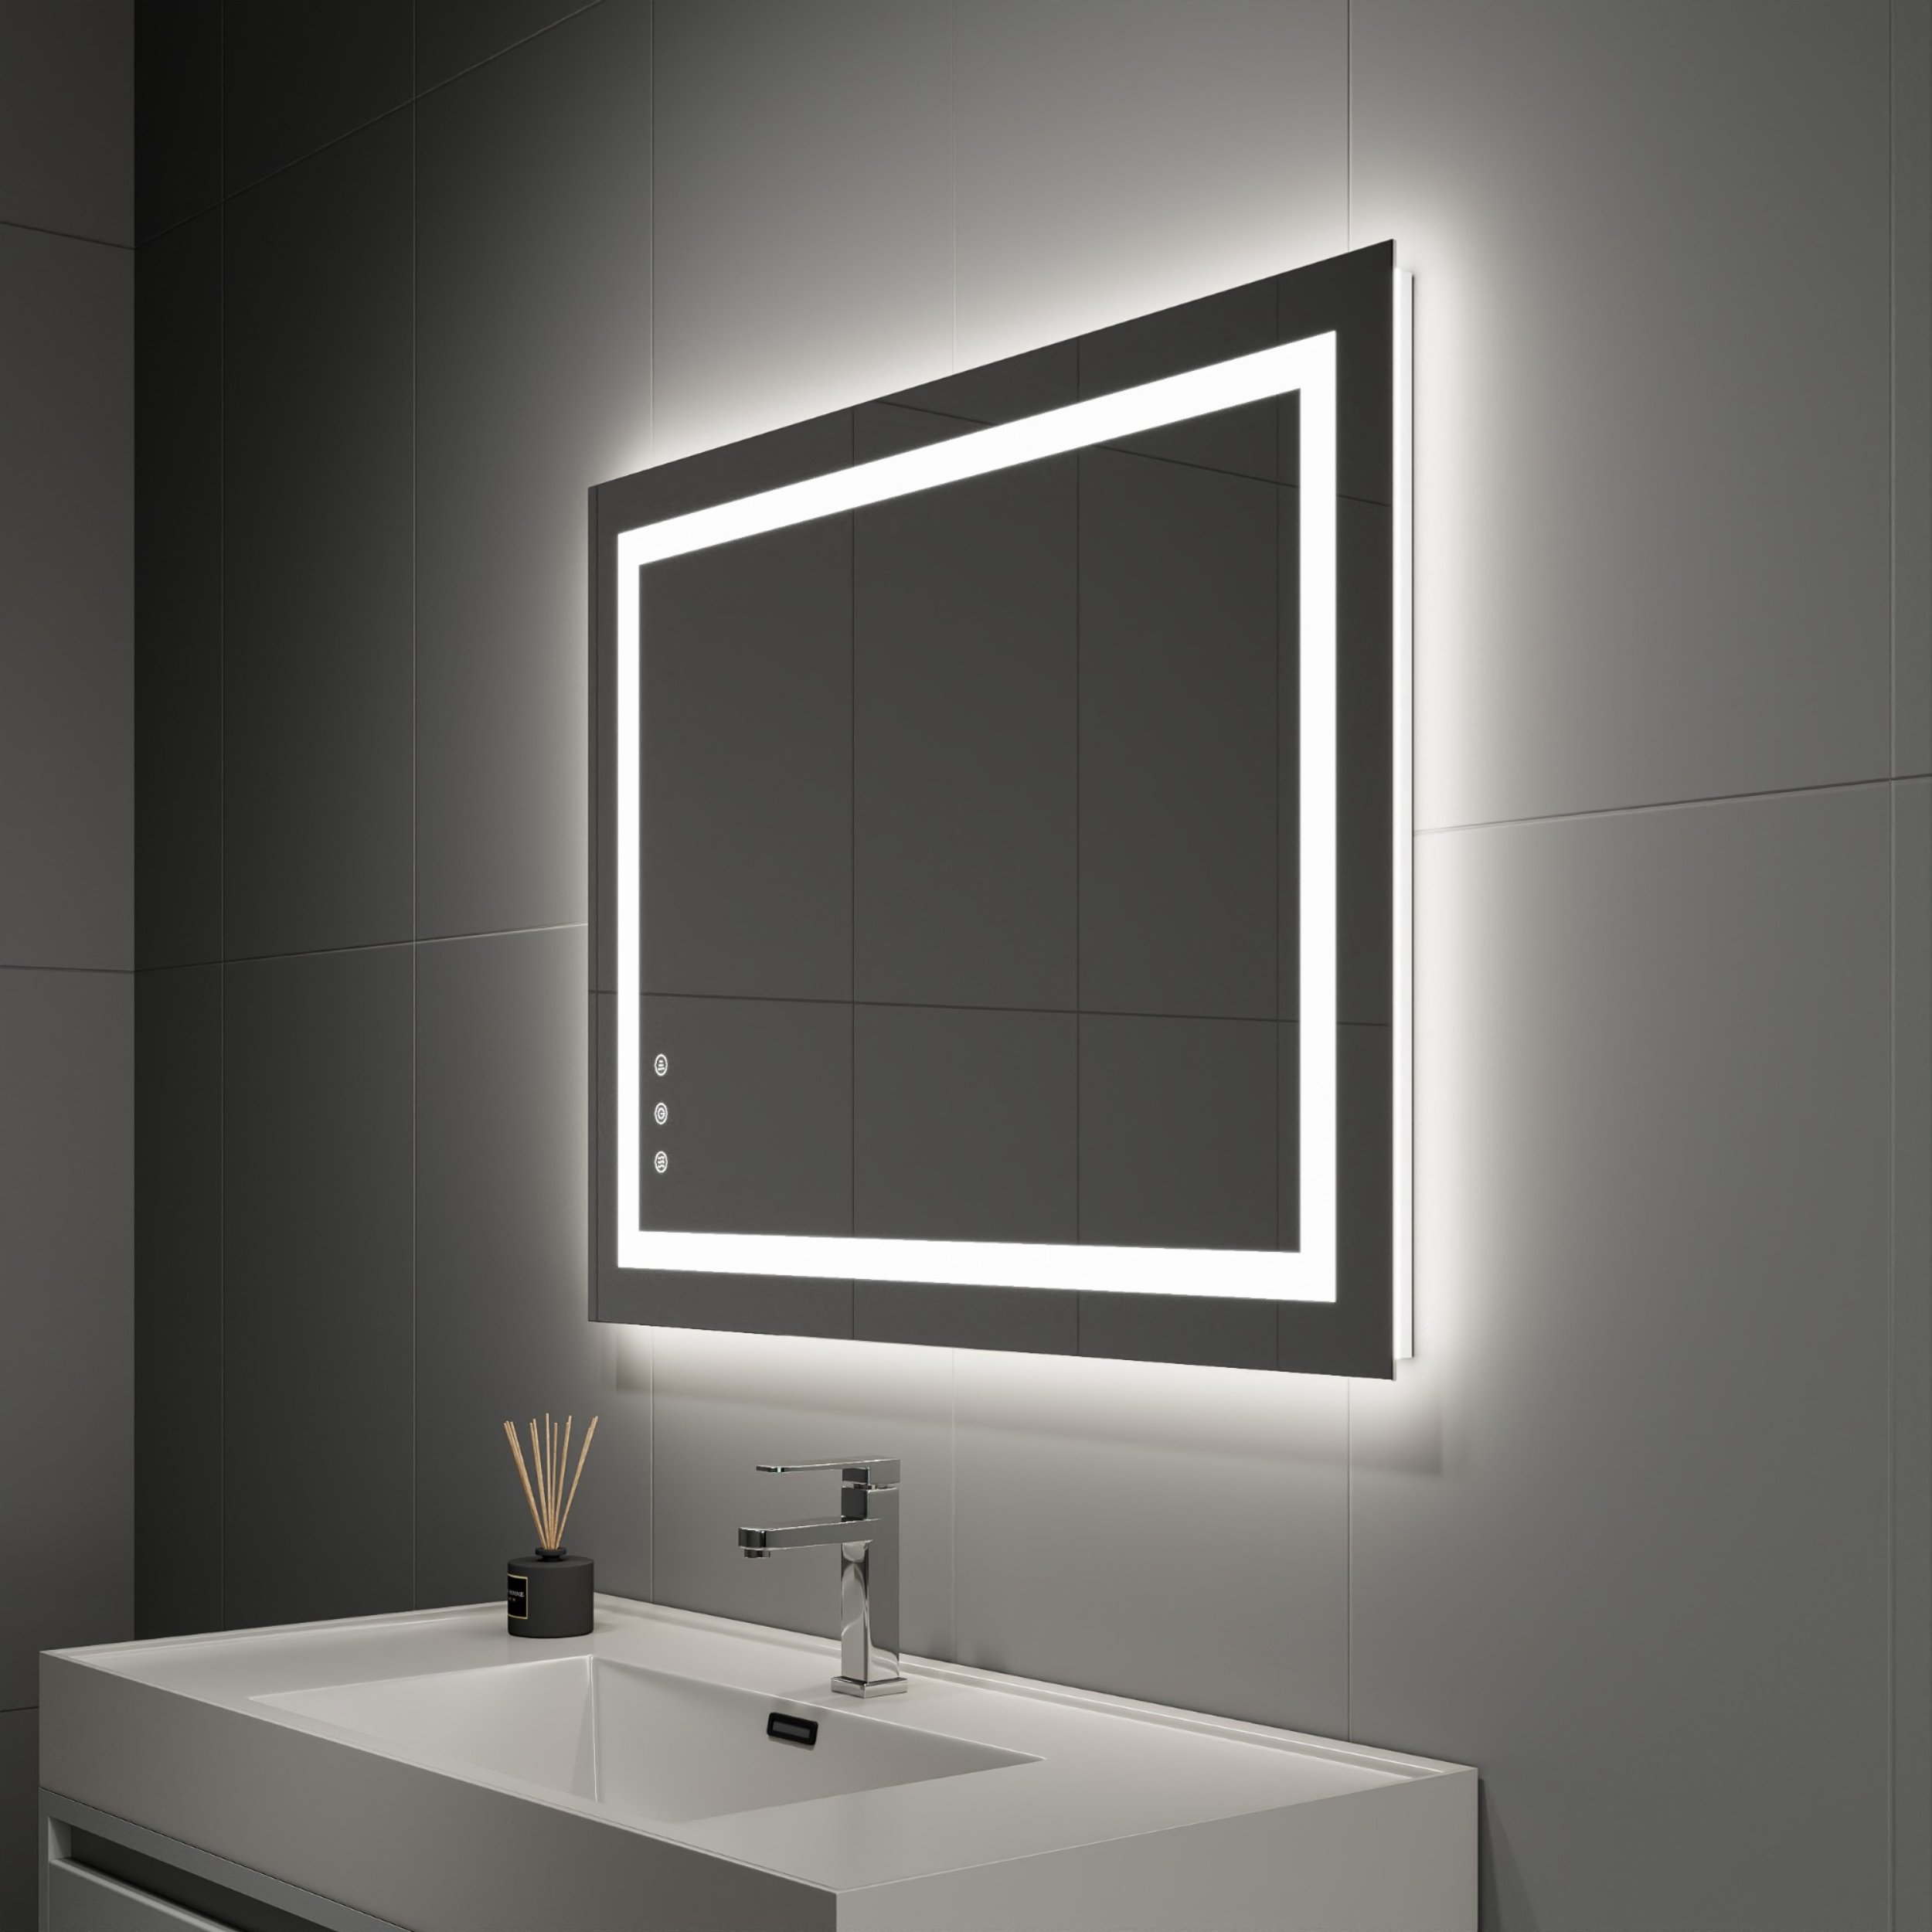 DP388 Frameless LED Bathroom Mirror - Dapai Mirror's US Hotel Project